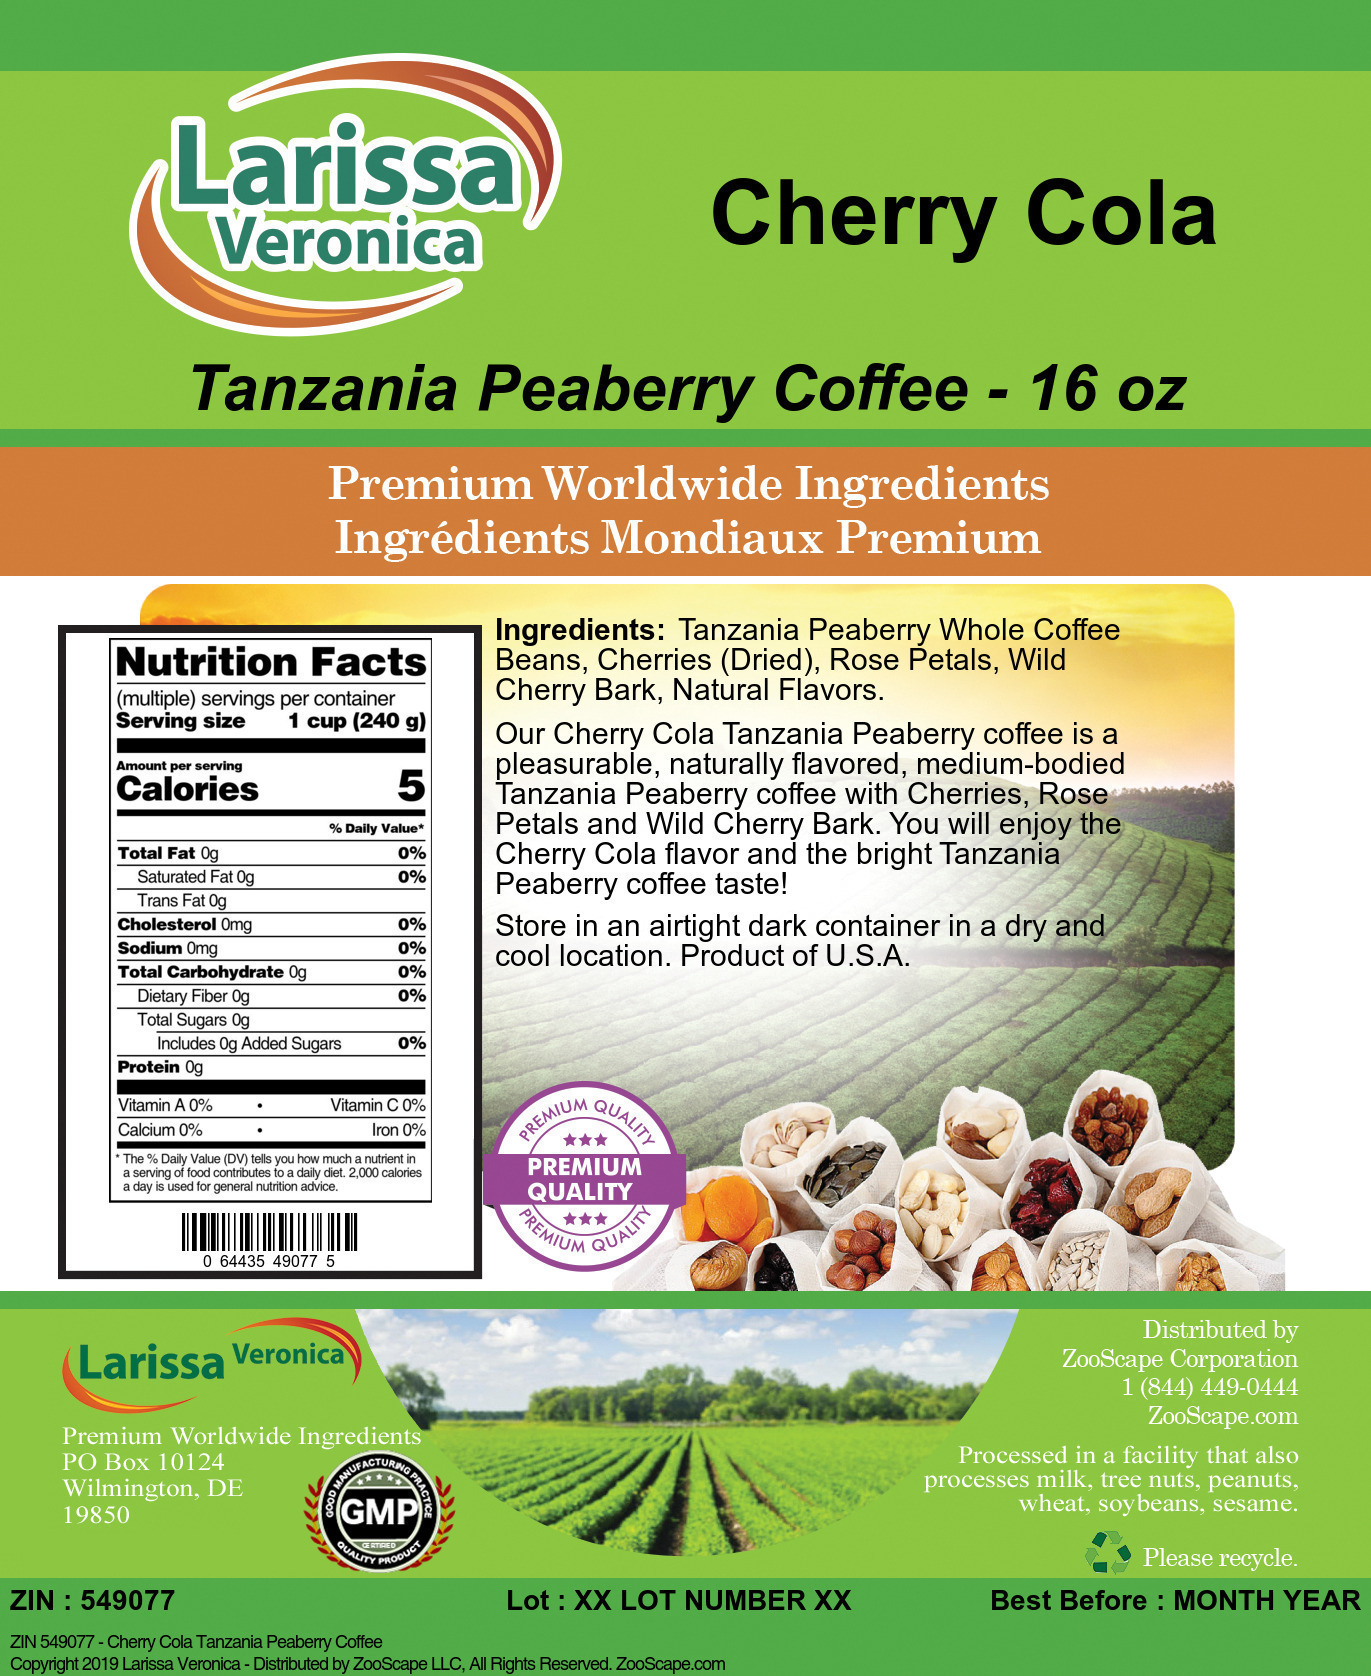 Cherry Cola Tanzania Peaberry Coffee - Label